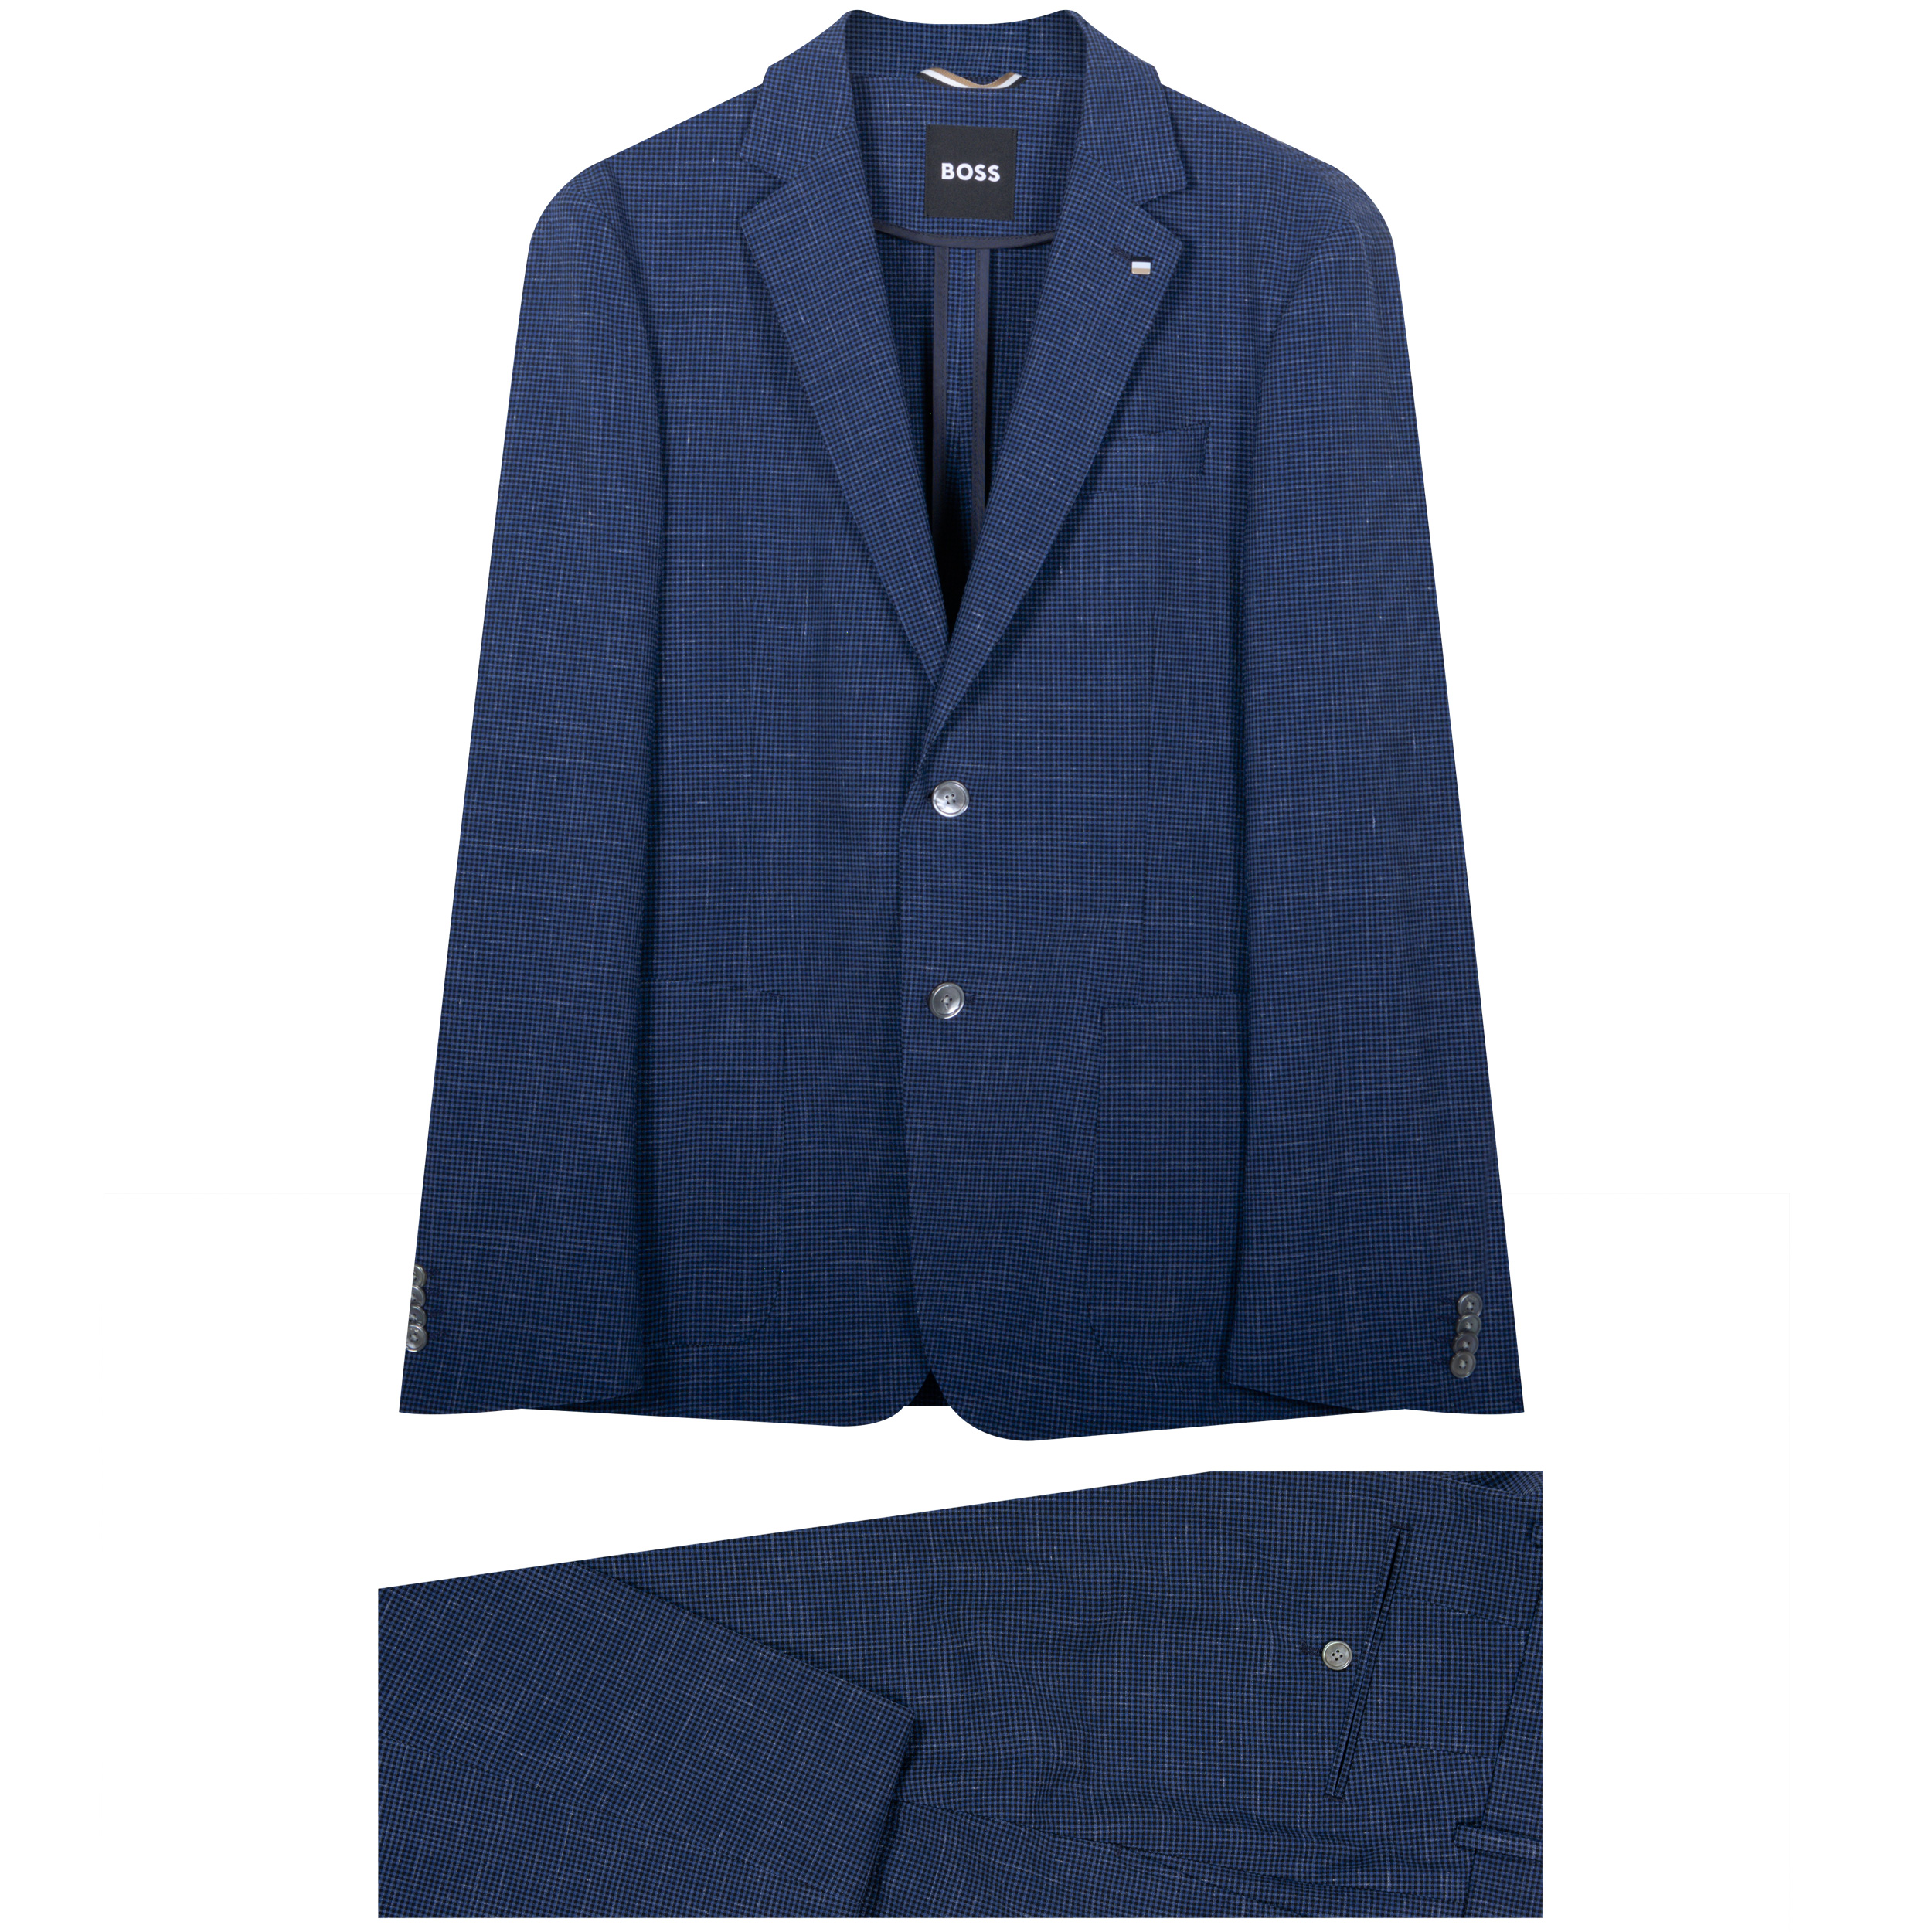 HUGO BOSS ’C-Hanry’ Italian Fabric Slim Fit Check Suit Navy